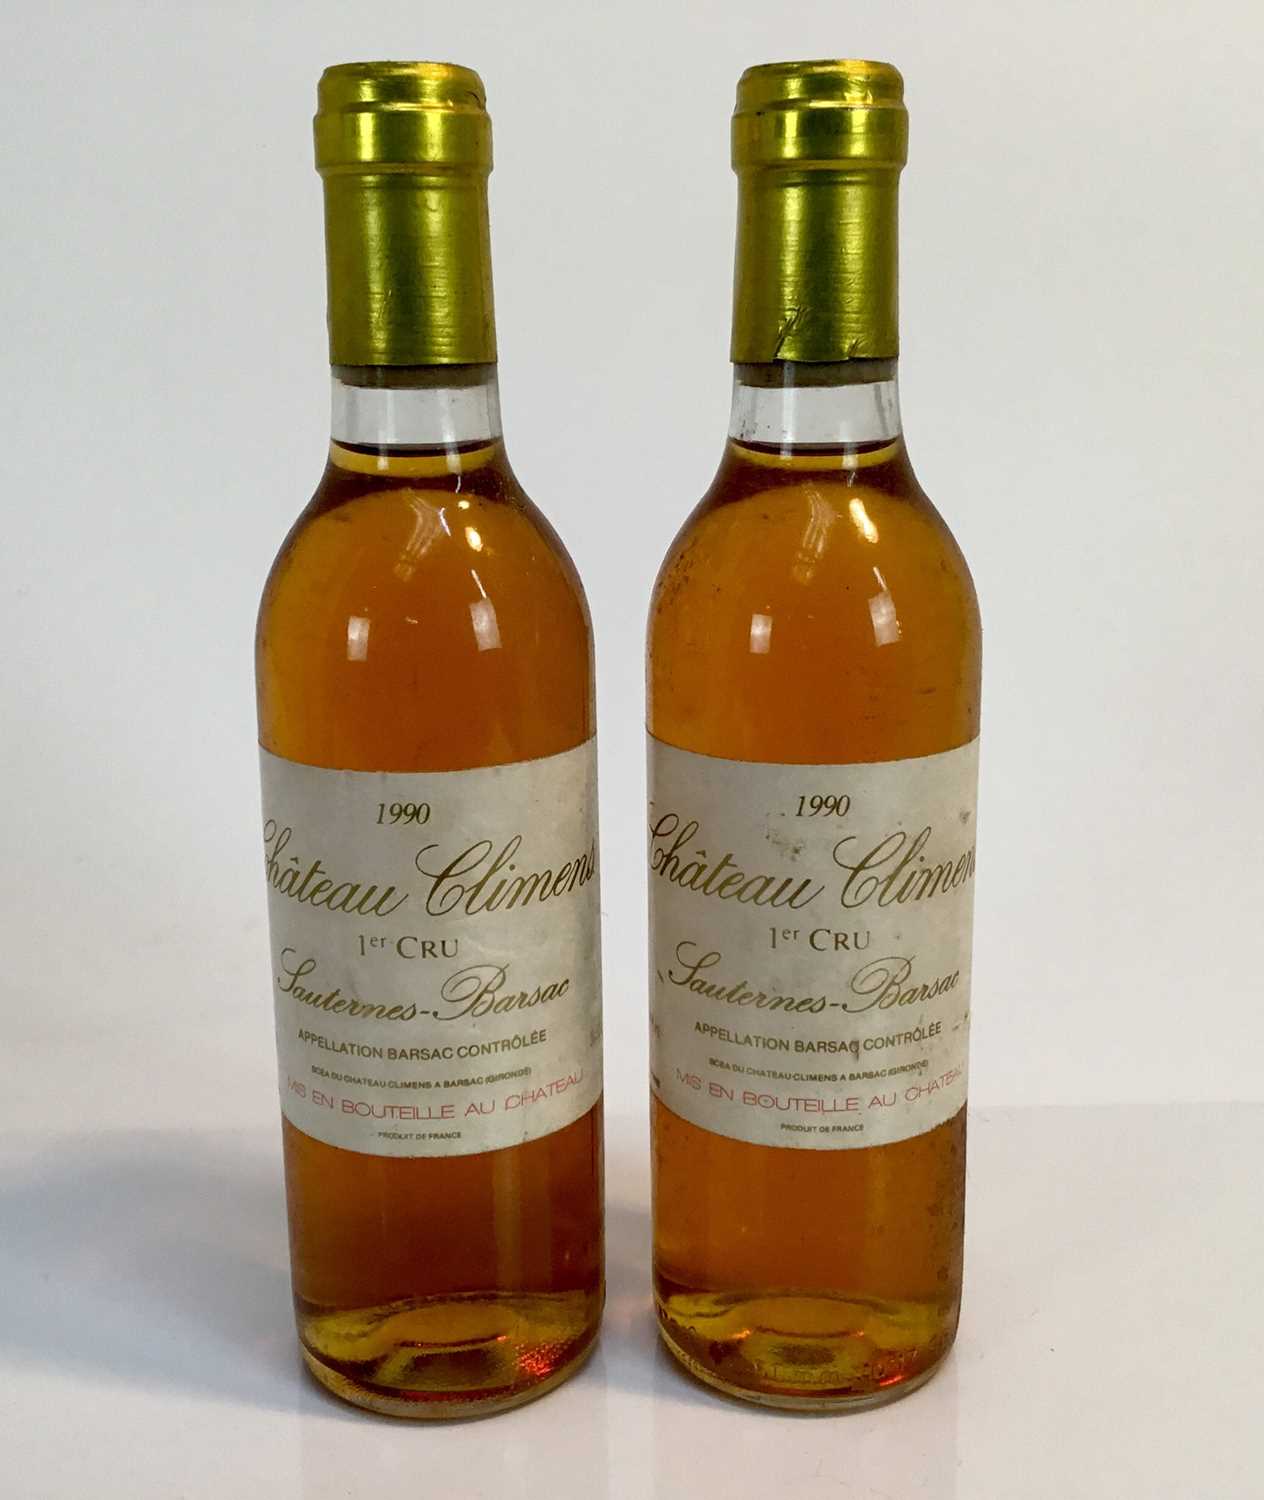 Lot 122 - Sauternes - two half bottles, Chateau Climens 1er Cru 1990